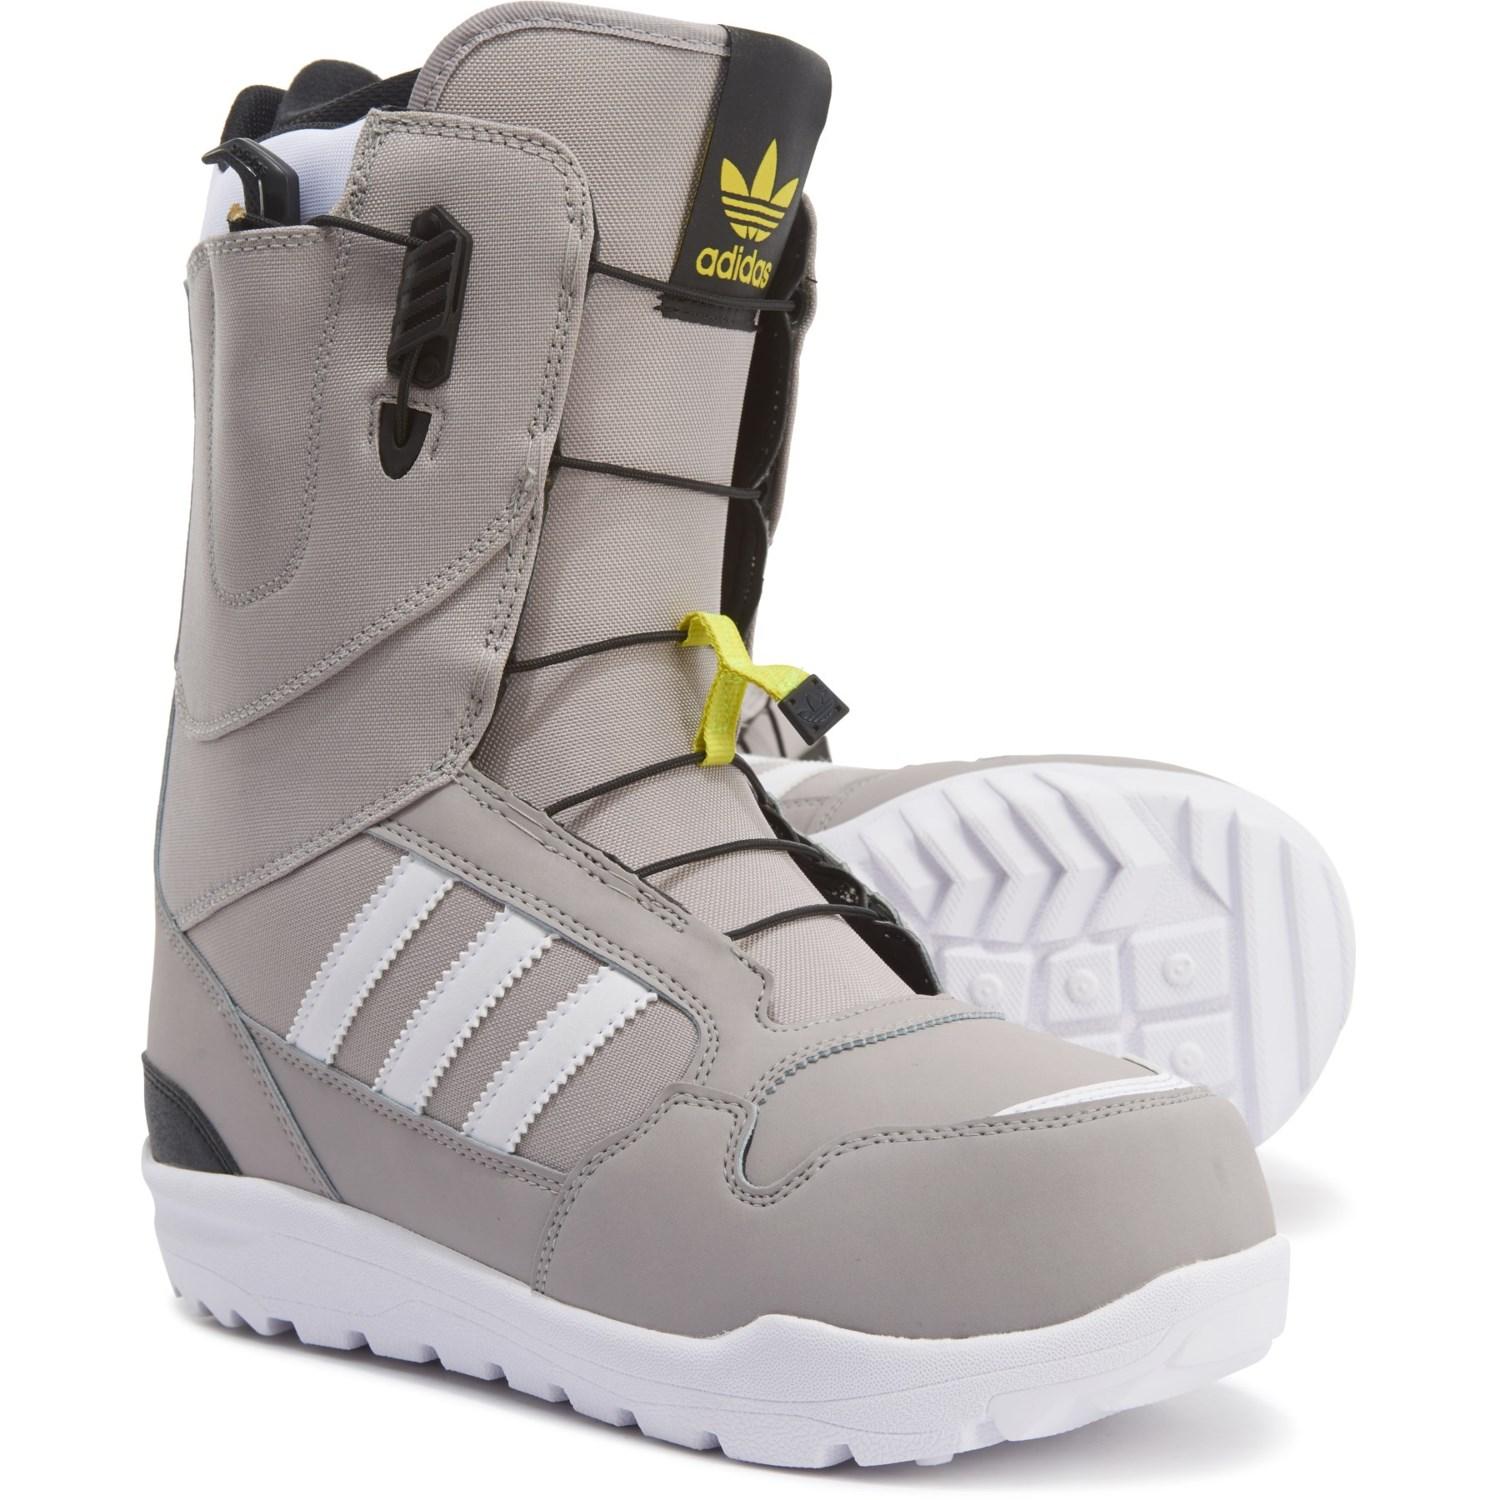 adidas zx 500 boots